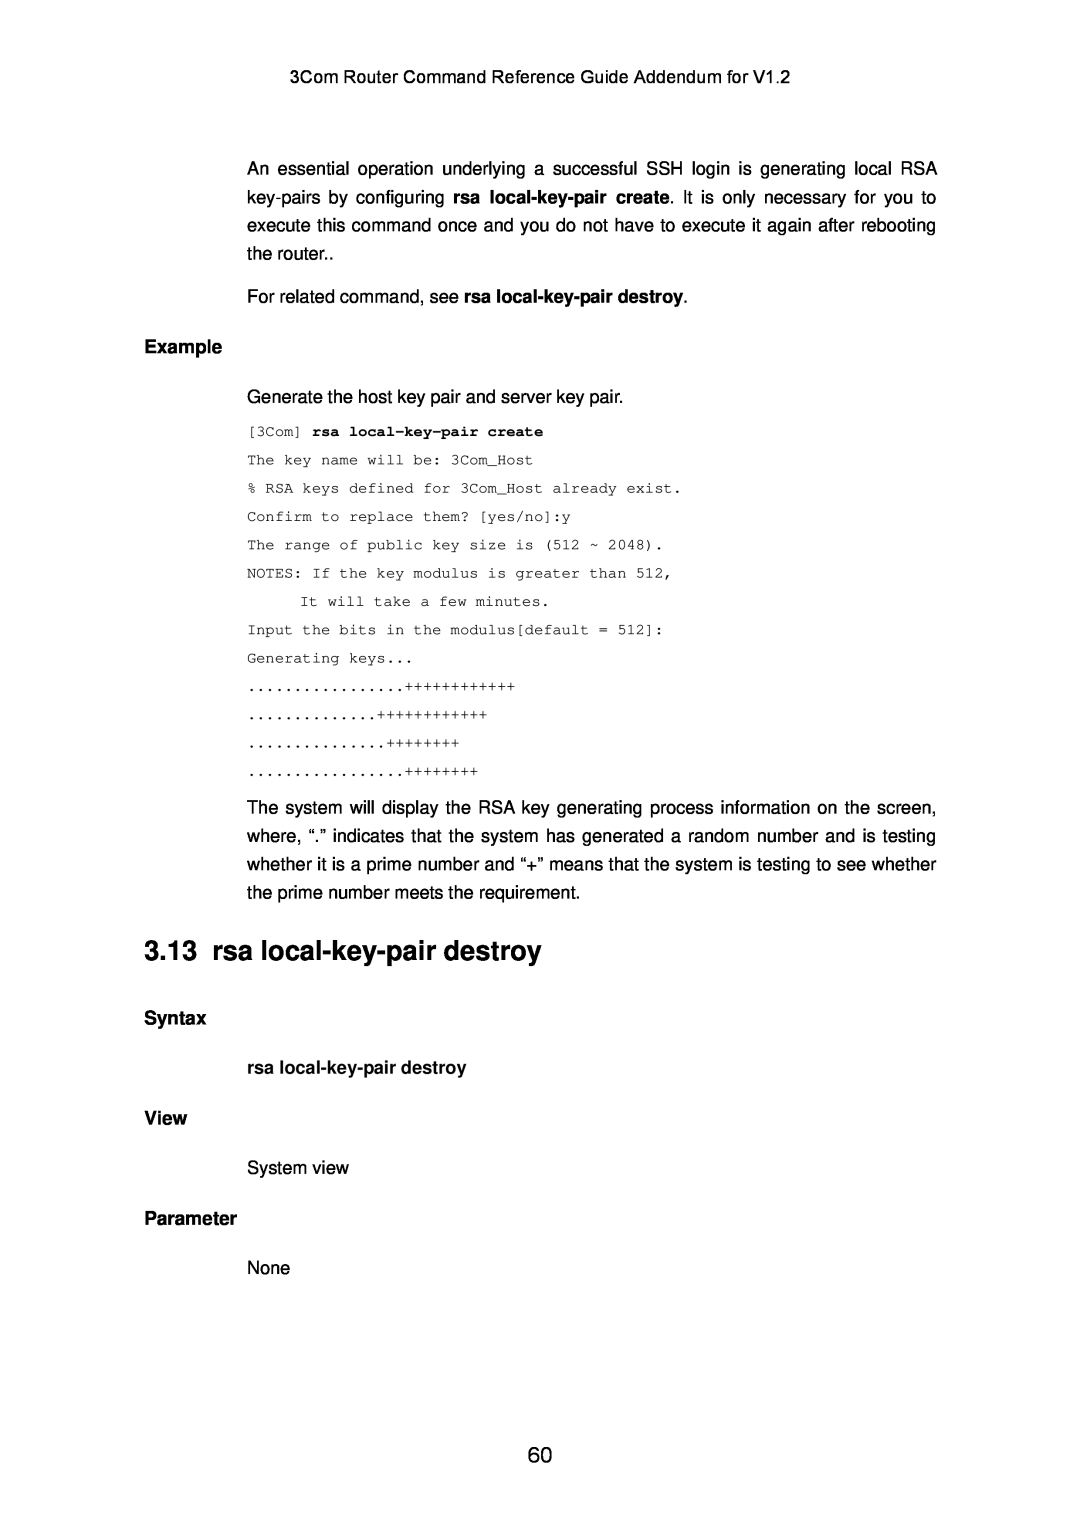 3Com 10014302 manual rsa local-key-pair destroy, Example, Syntax, View, Parameter 